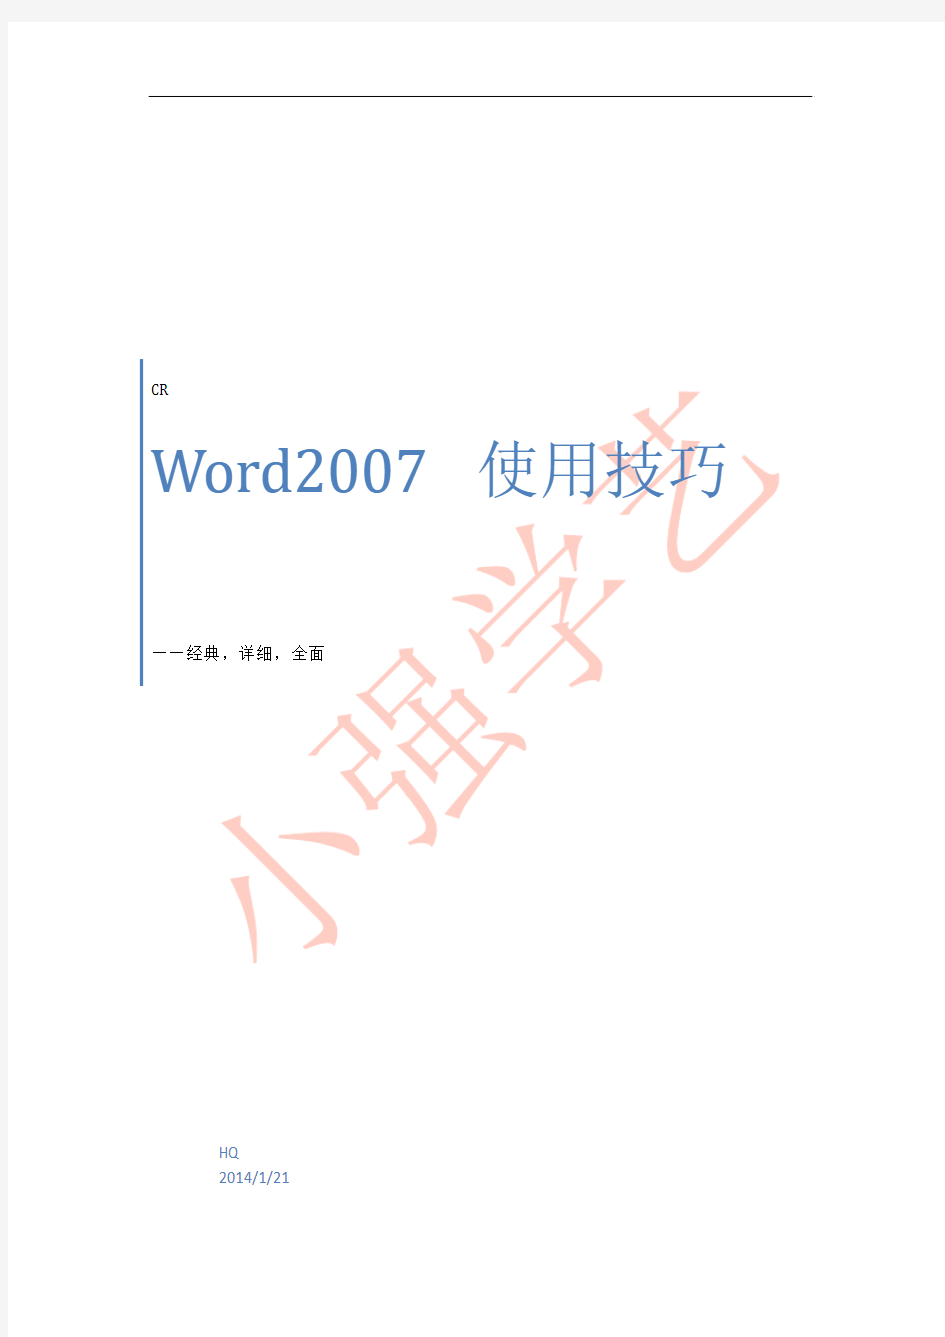 Word2007使用技巧大全(超经典)